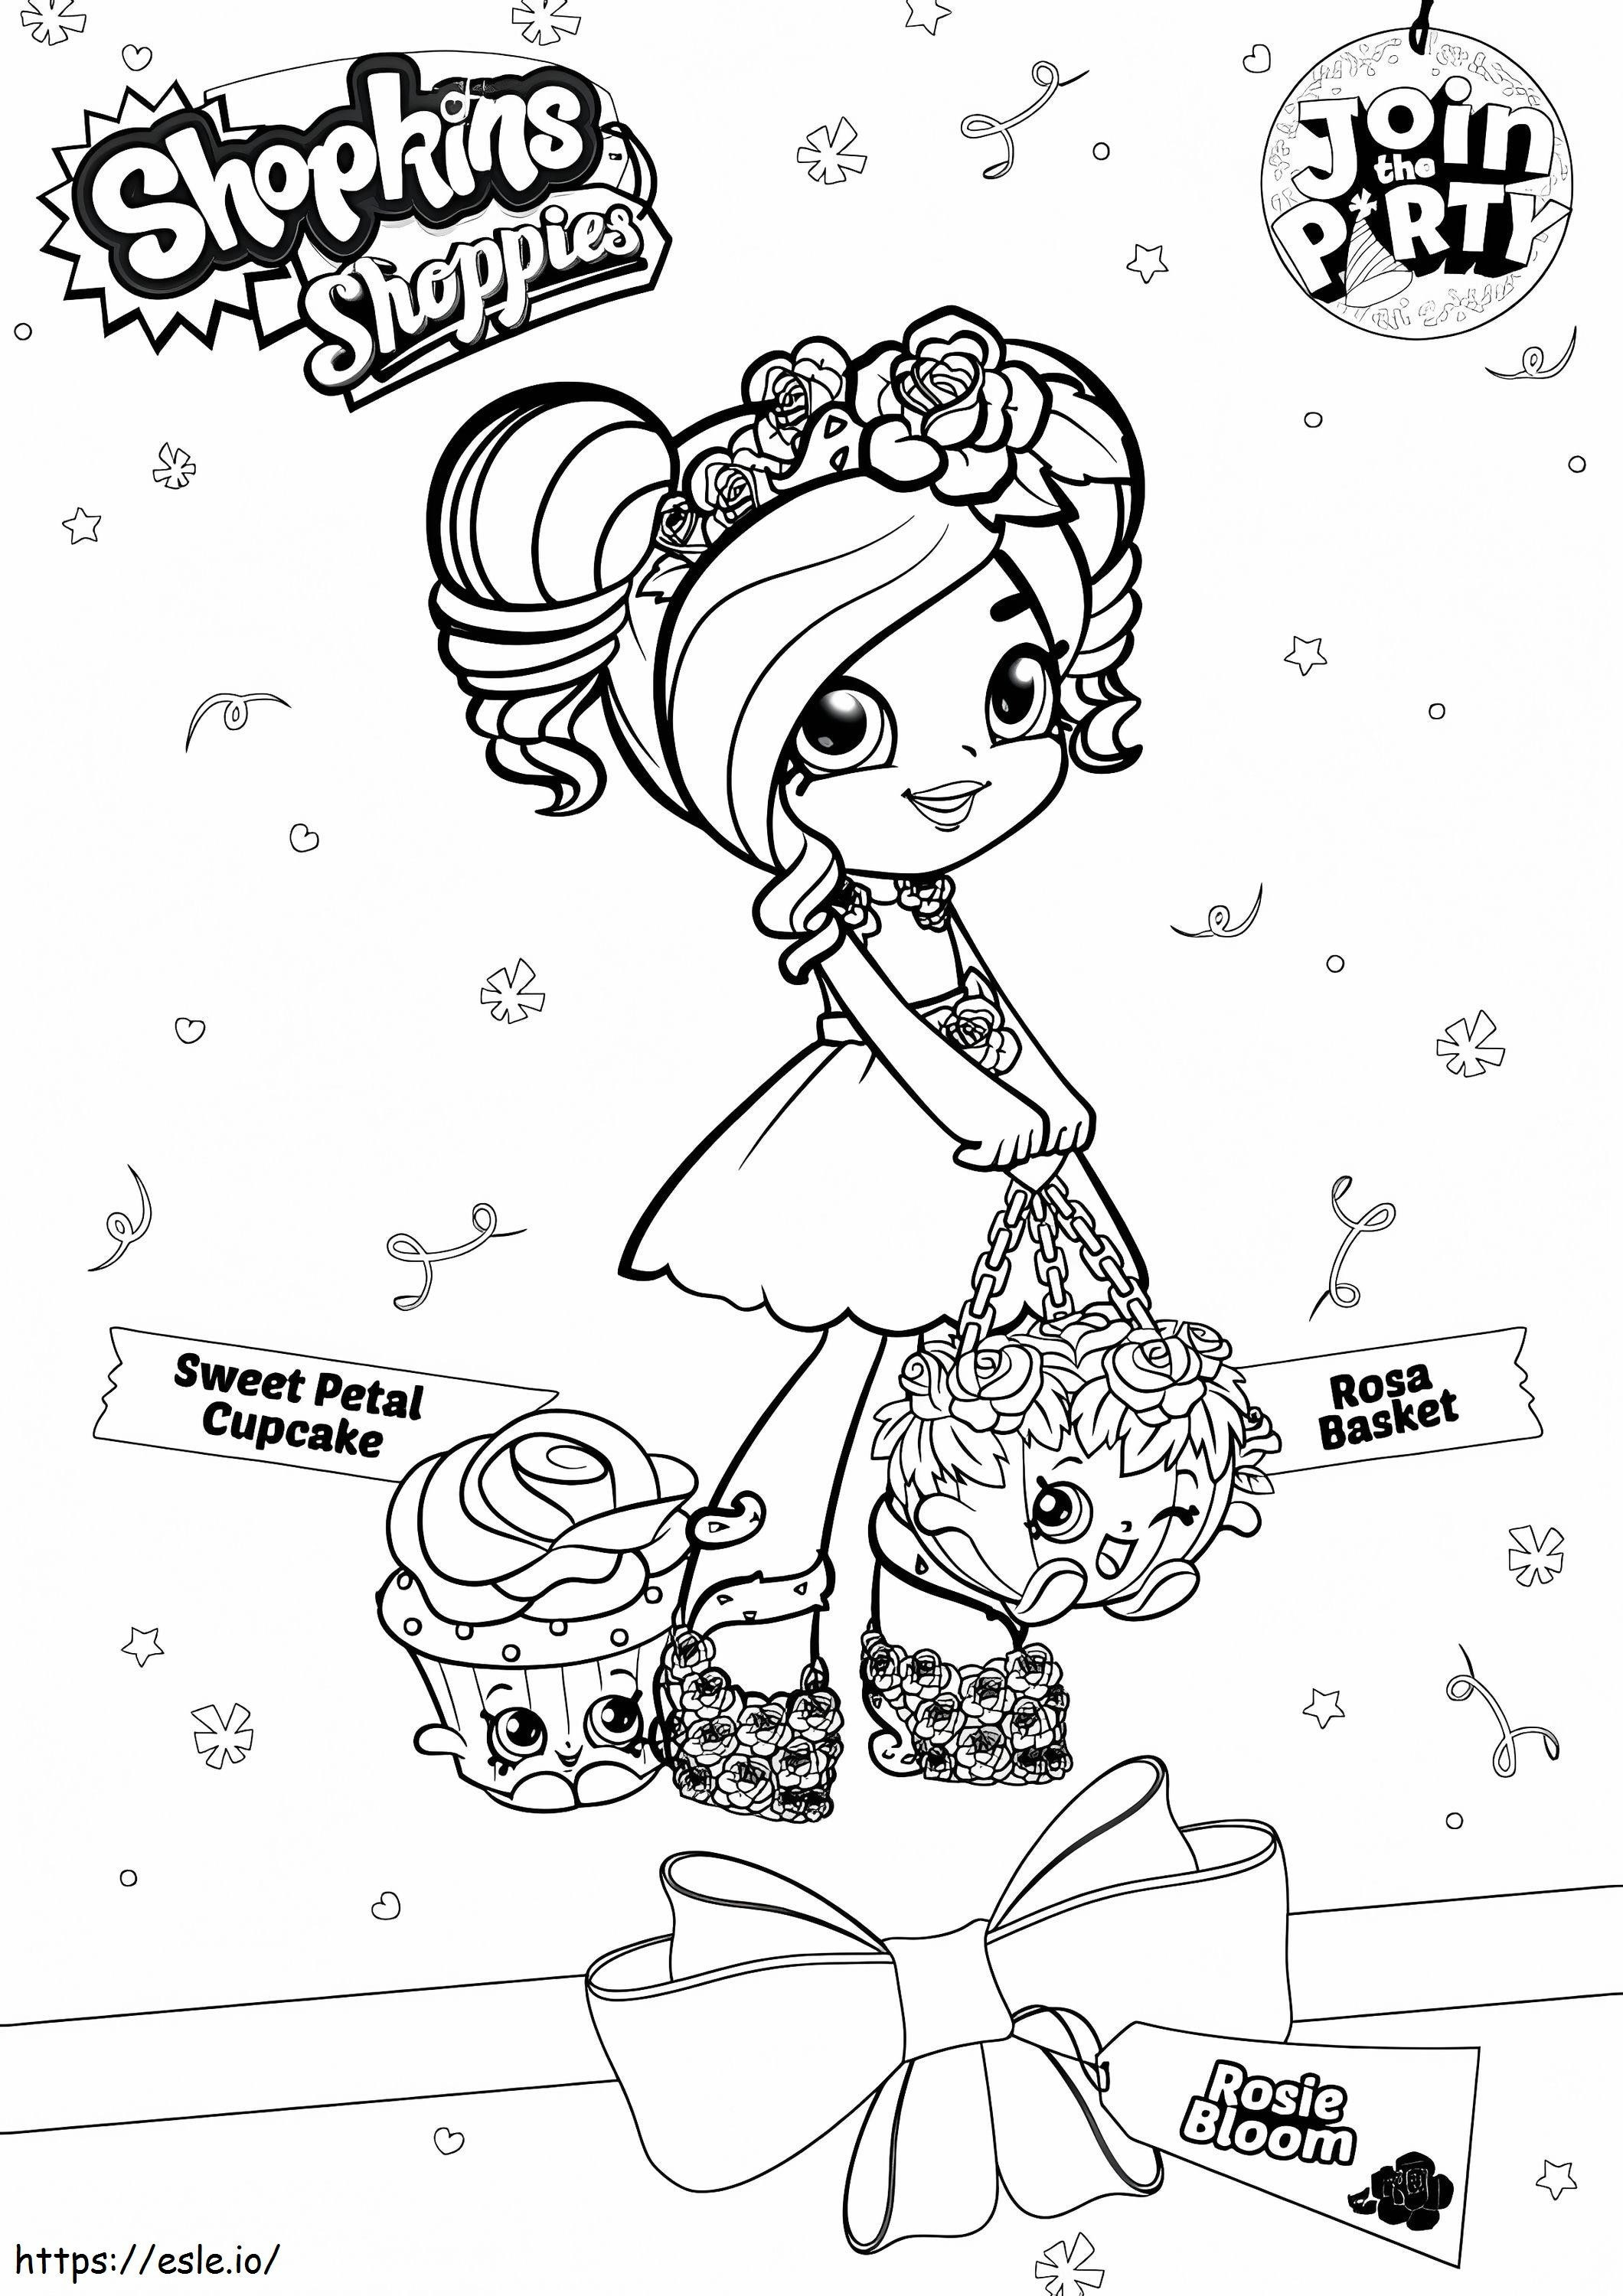 Shopkins Rosie Bloom coloring page